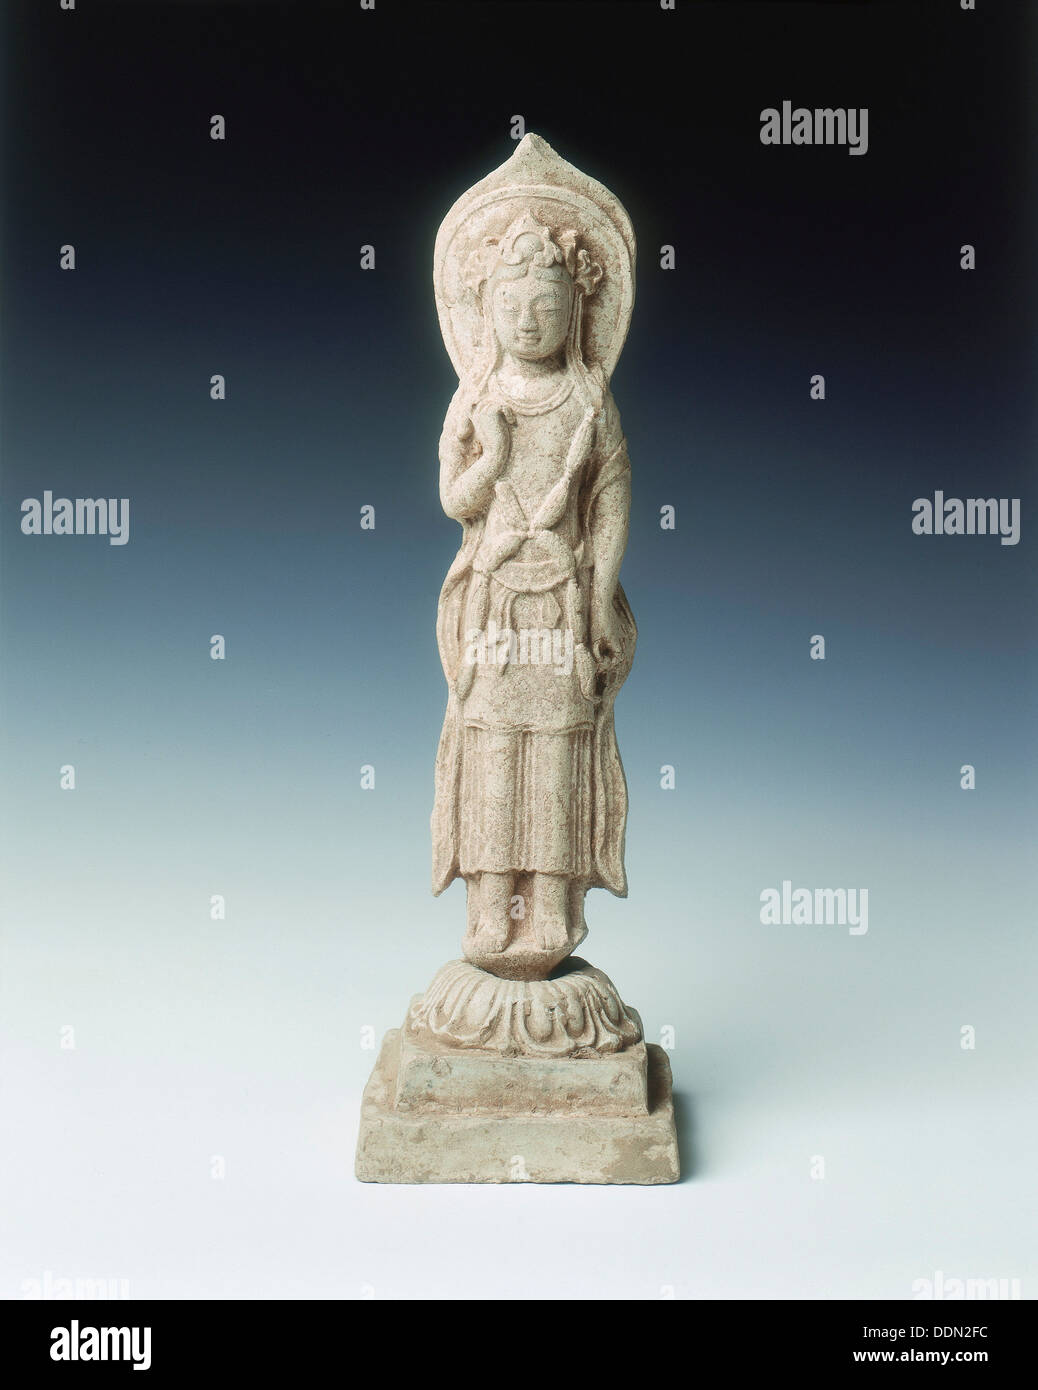 Keramik-Figur von Avalokitesvara, nördliche Qi-Dynastie, China, 563. Stockfoto